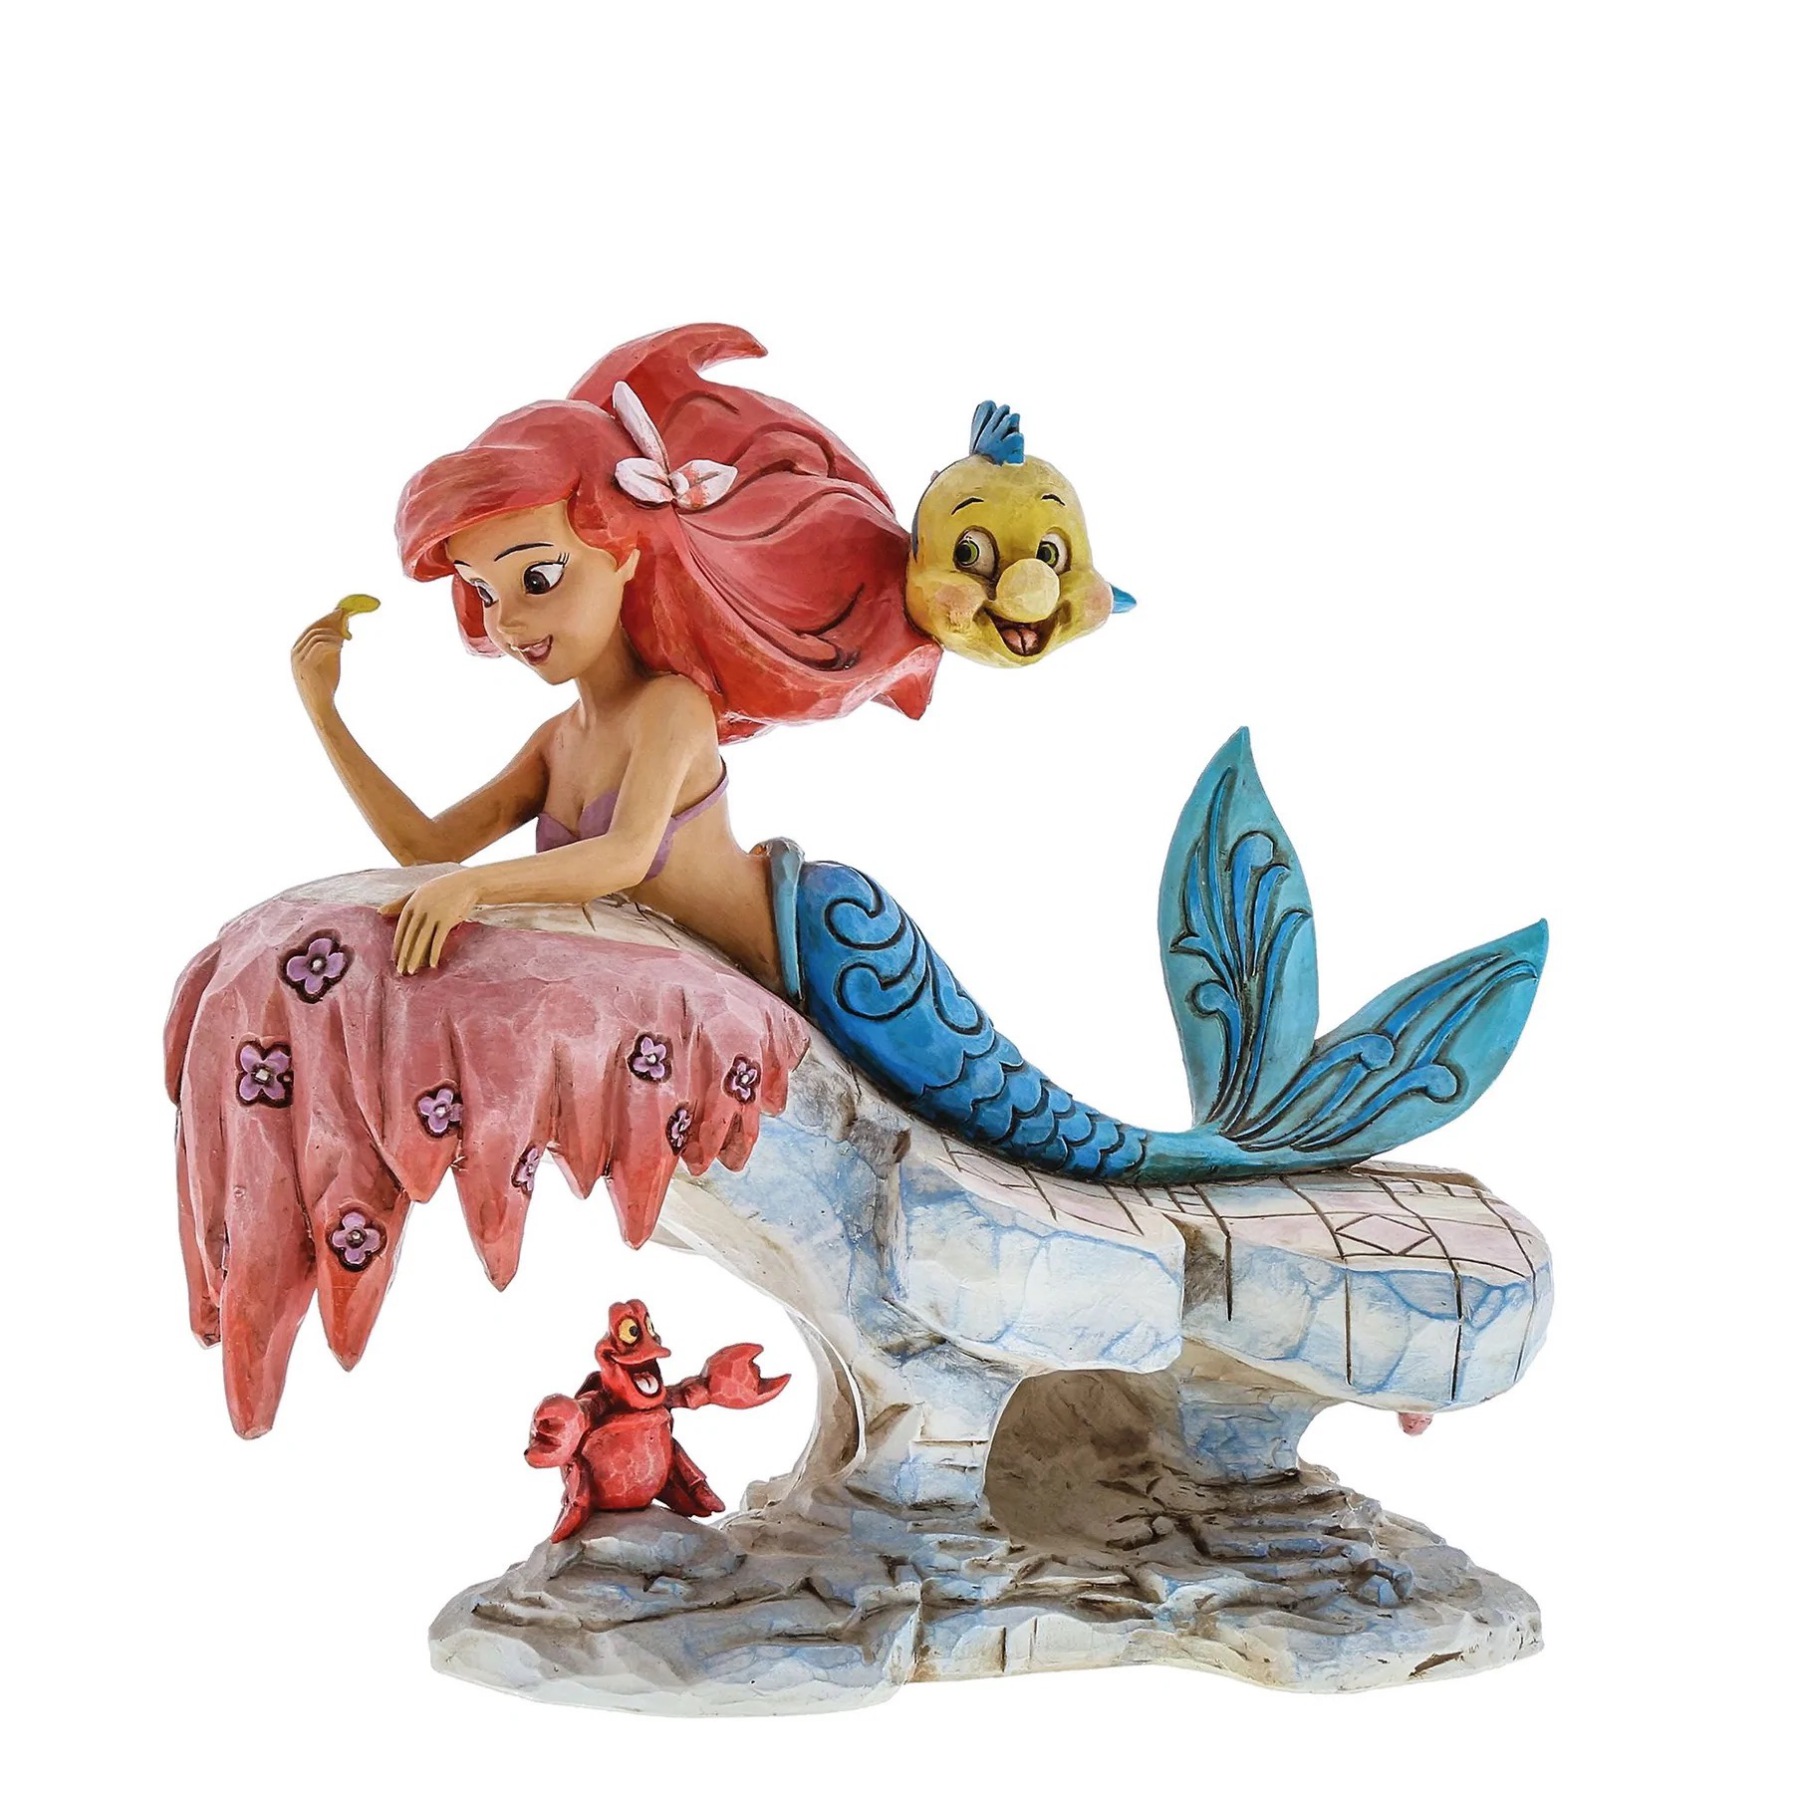  مجسمه دیزنی پری دریایی The Little Mermaid 